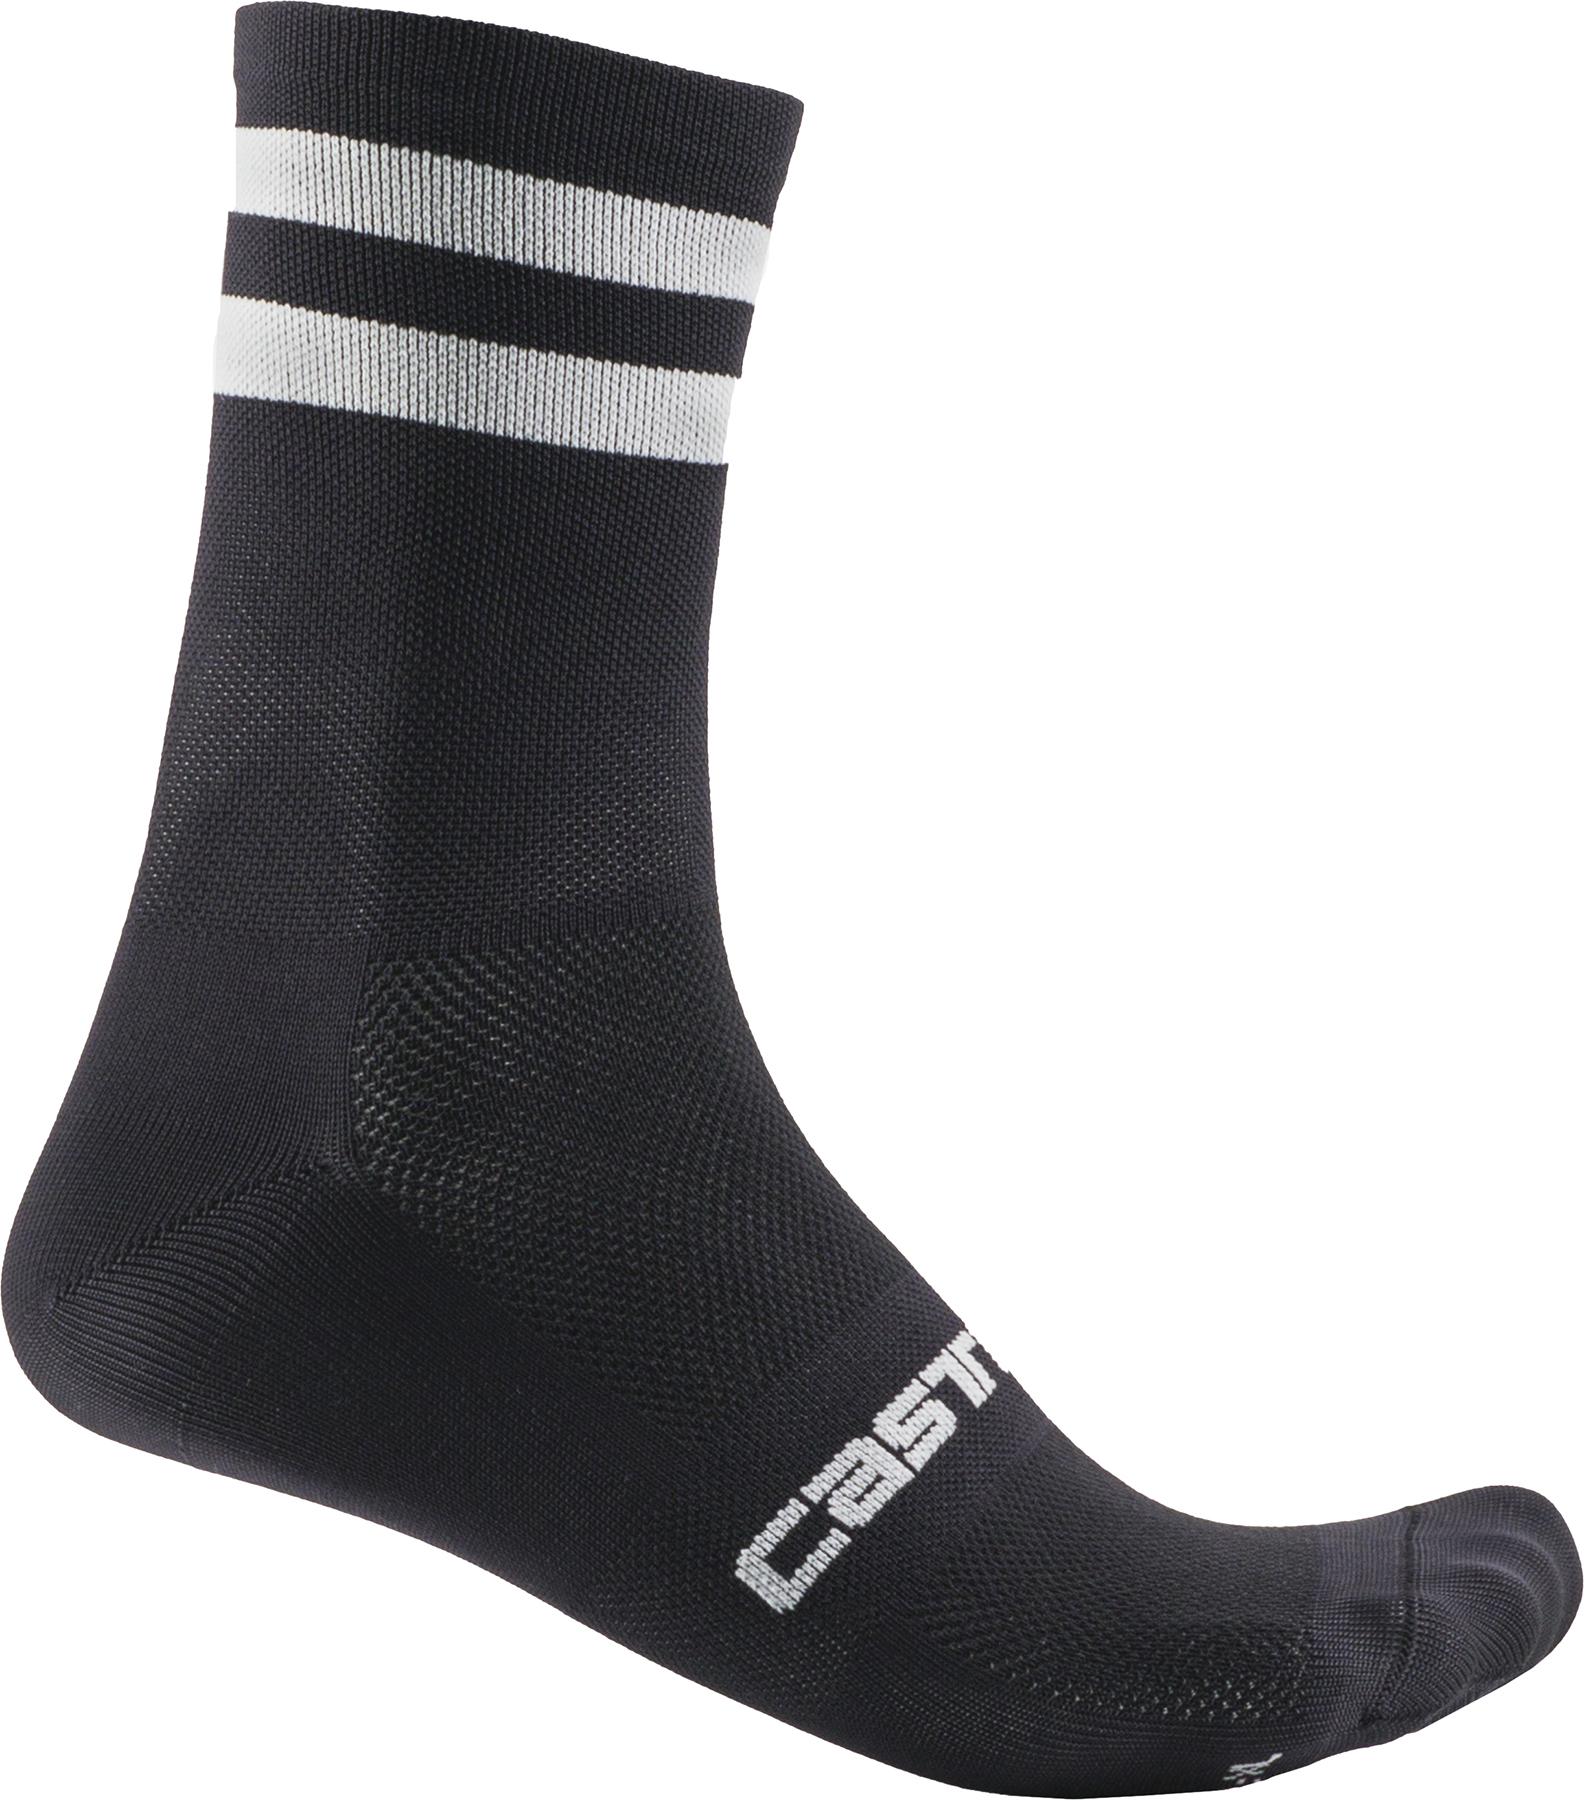 Castelli Velocissimo Kit Socks - Black/white